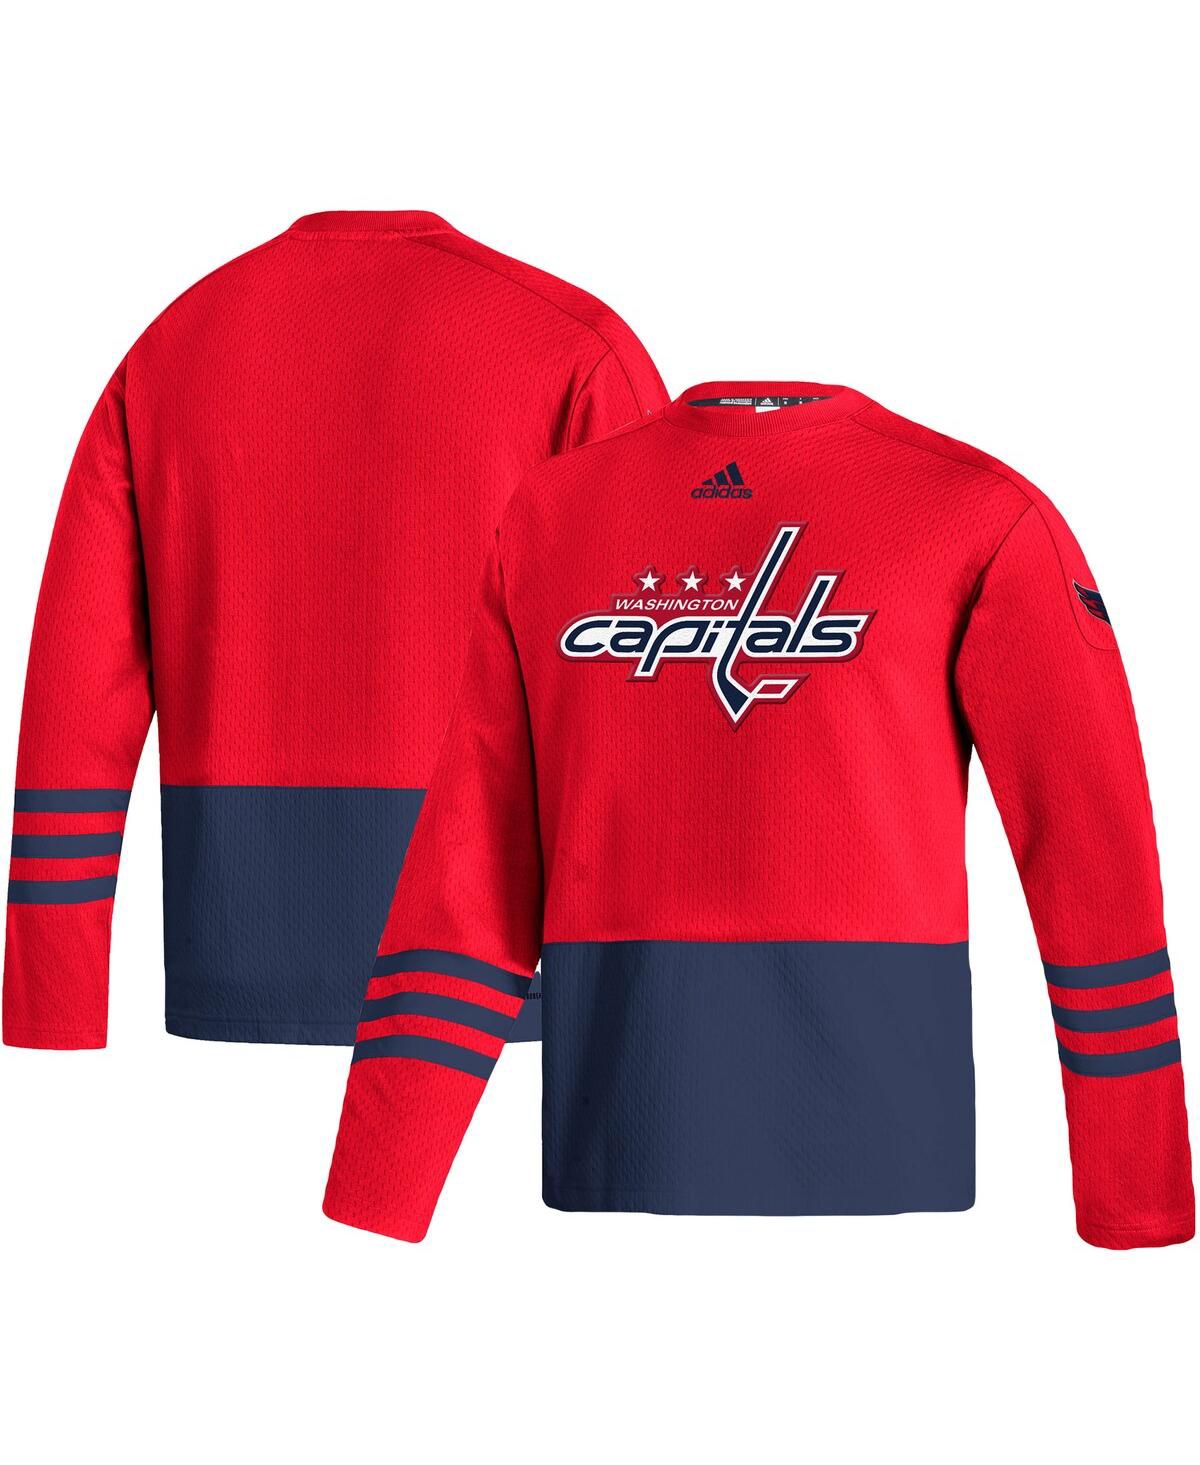 Men's adidas Red Washington Capitals Logo Aeroready Pullover Sweater - Red